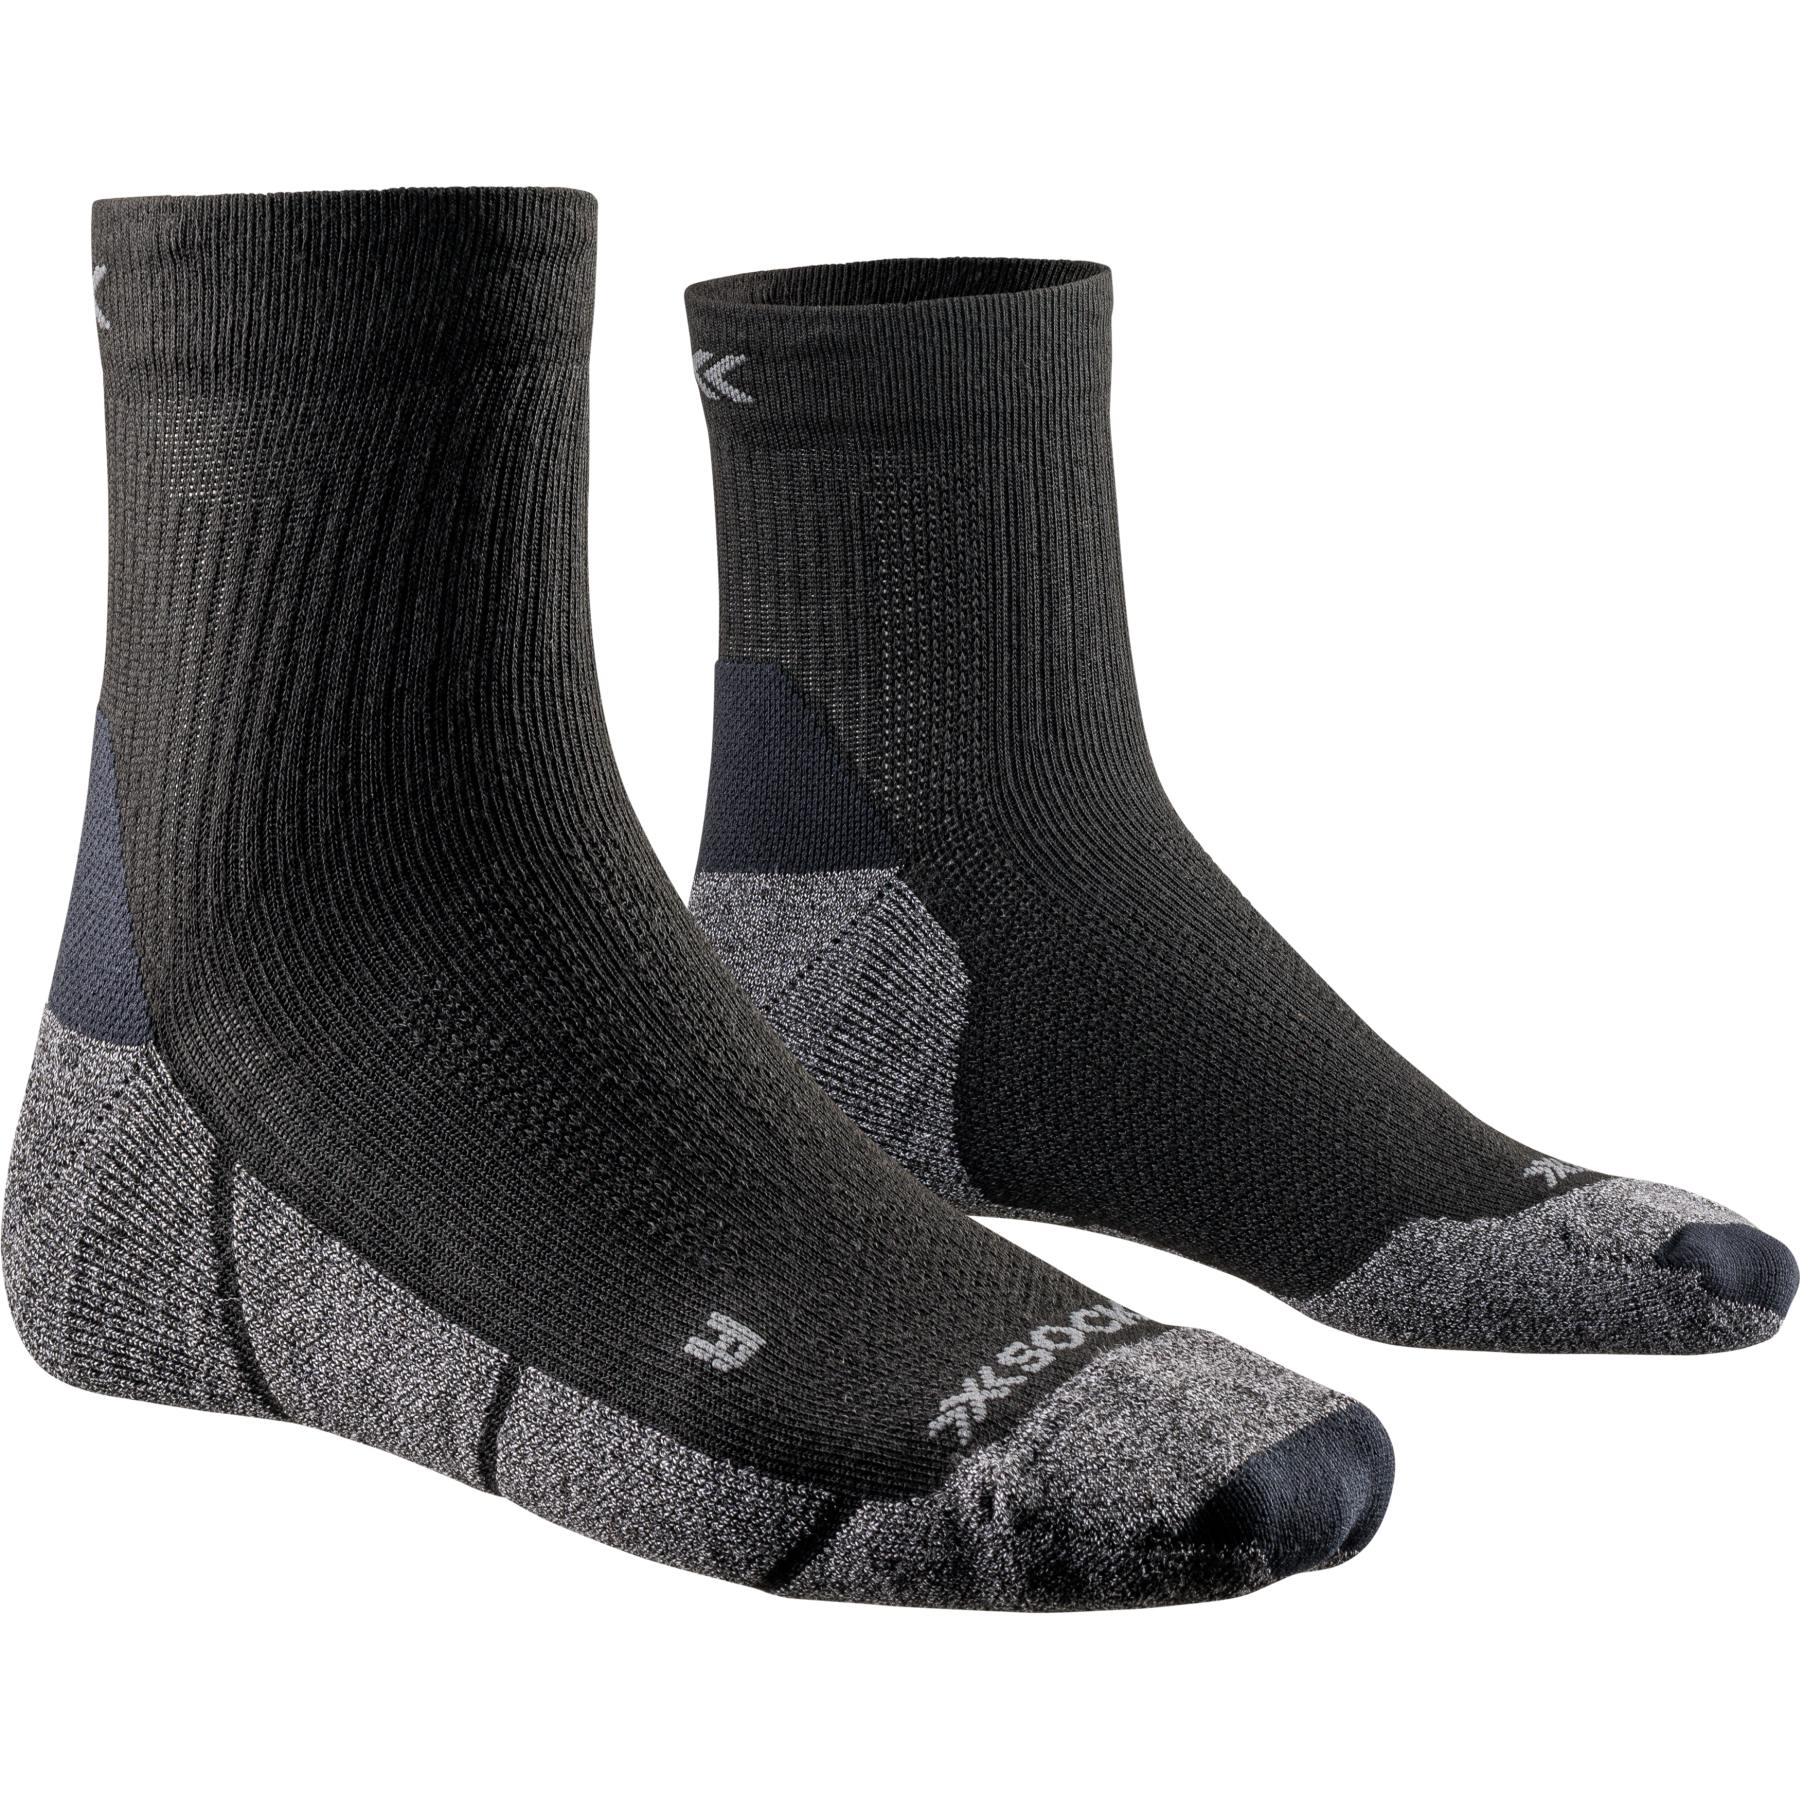 Productfoto van X-Socks Core Natural Ankle Sokken - black/charcoal